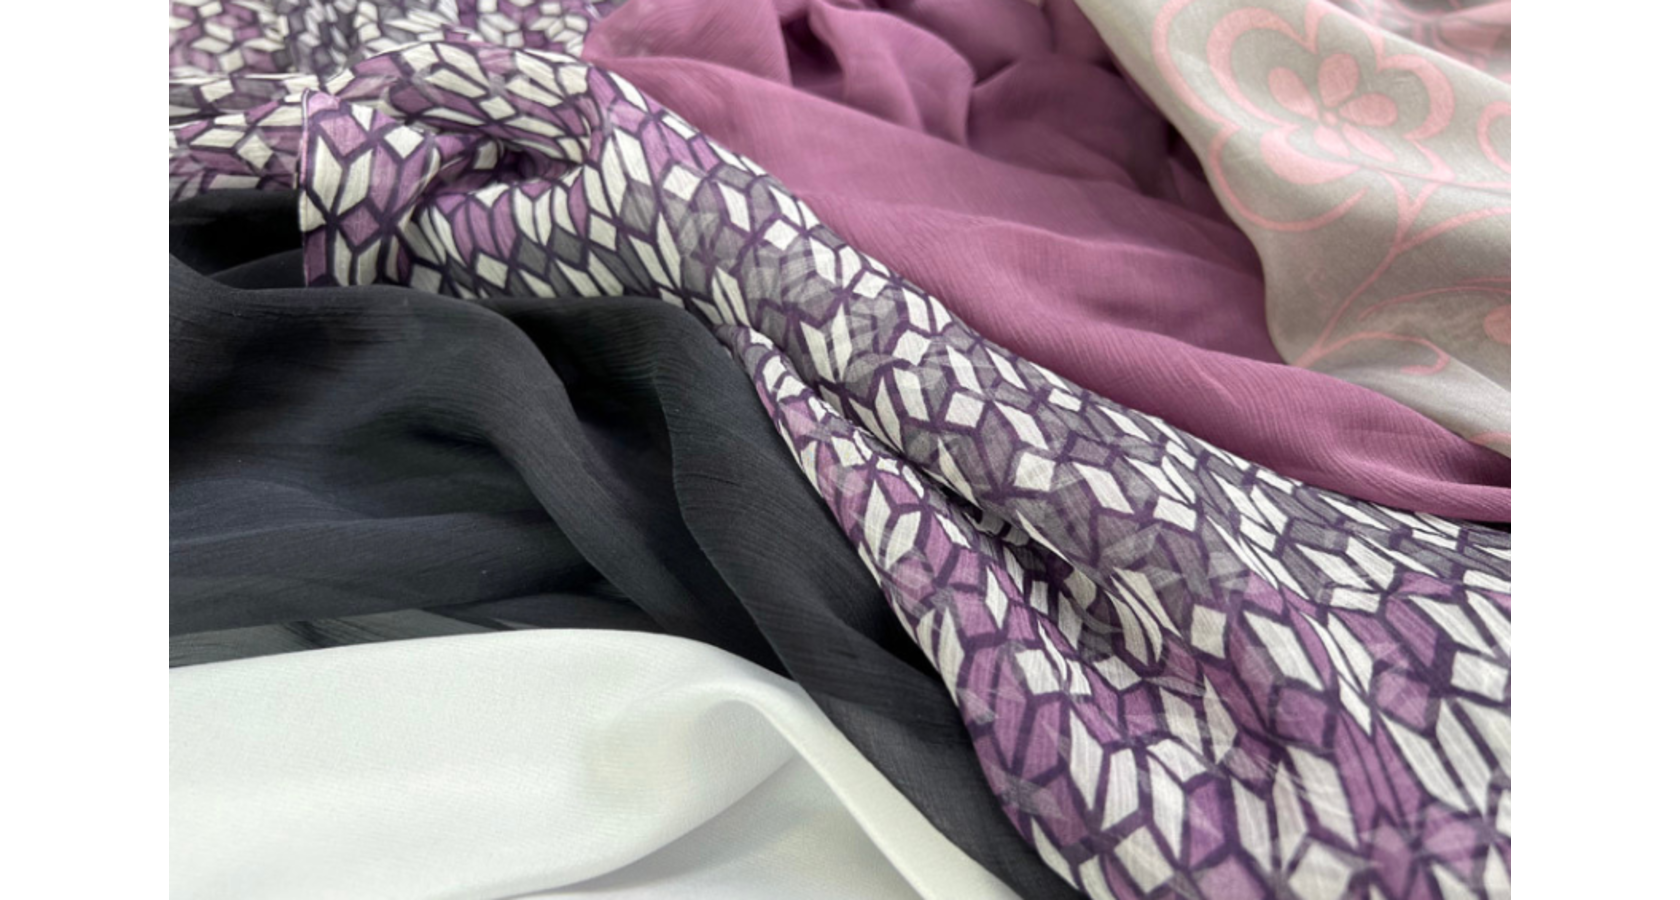 Sheer Dress Fabric  For The Finer Things - Silk Chiffon - Plum